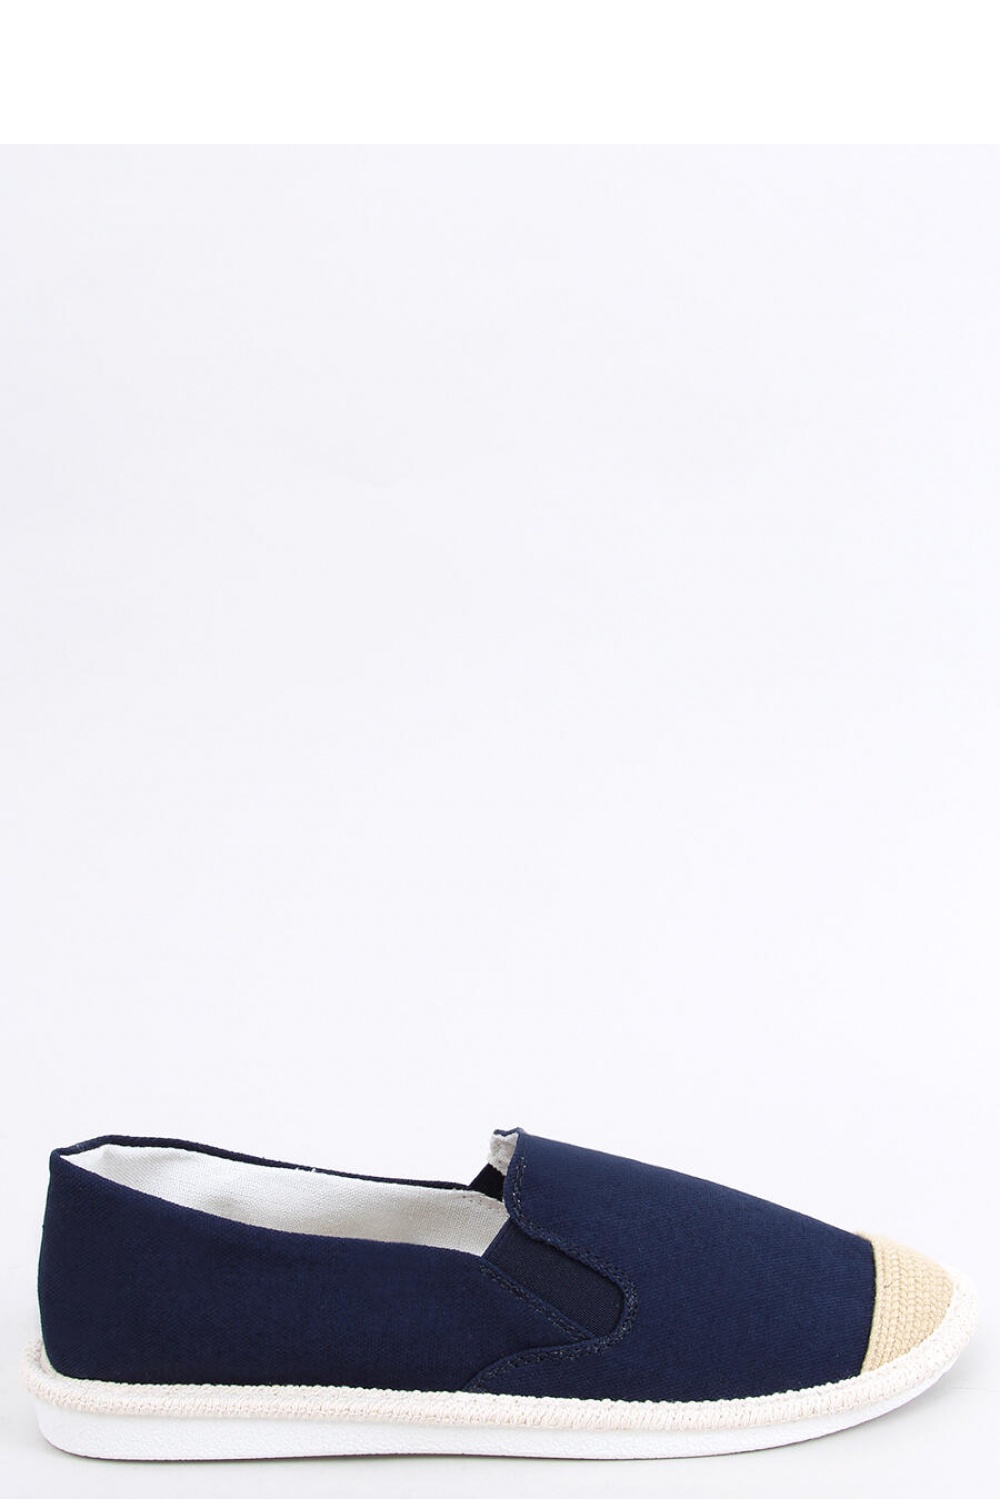 Espadrilles model 163316 Inello marineblau Damen